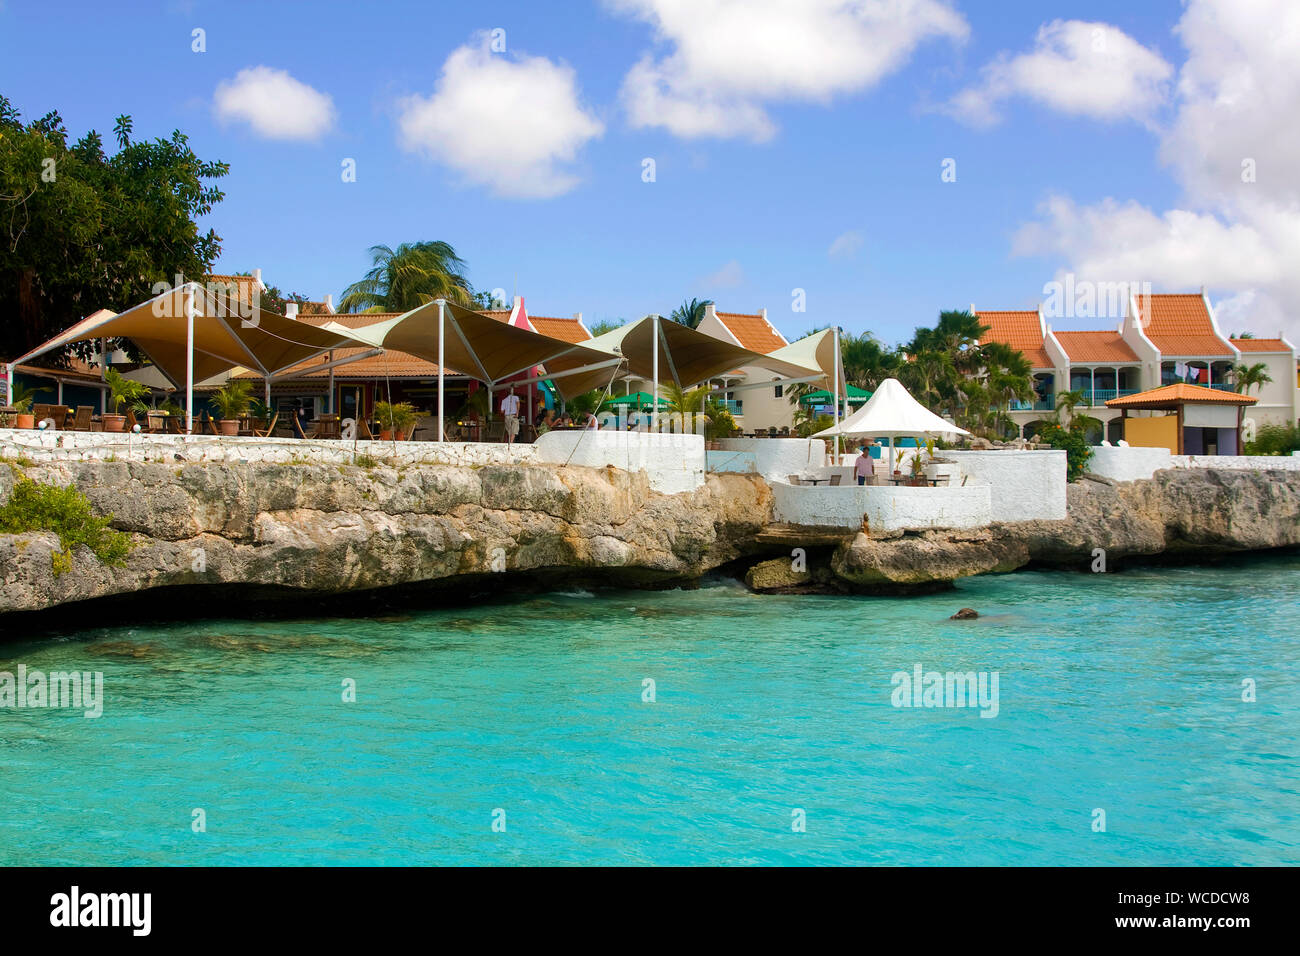 Captain Don's Habitat, famous Resort and Diving hotel, Kralendijk, Bonaire, Netherland Antilles, Antilles, Caribbean sea, Caribbean Stock Photo